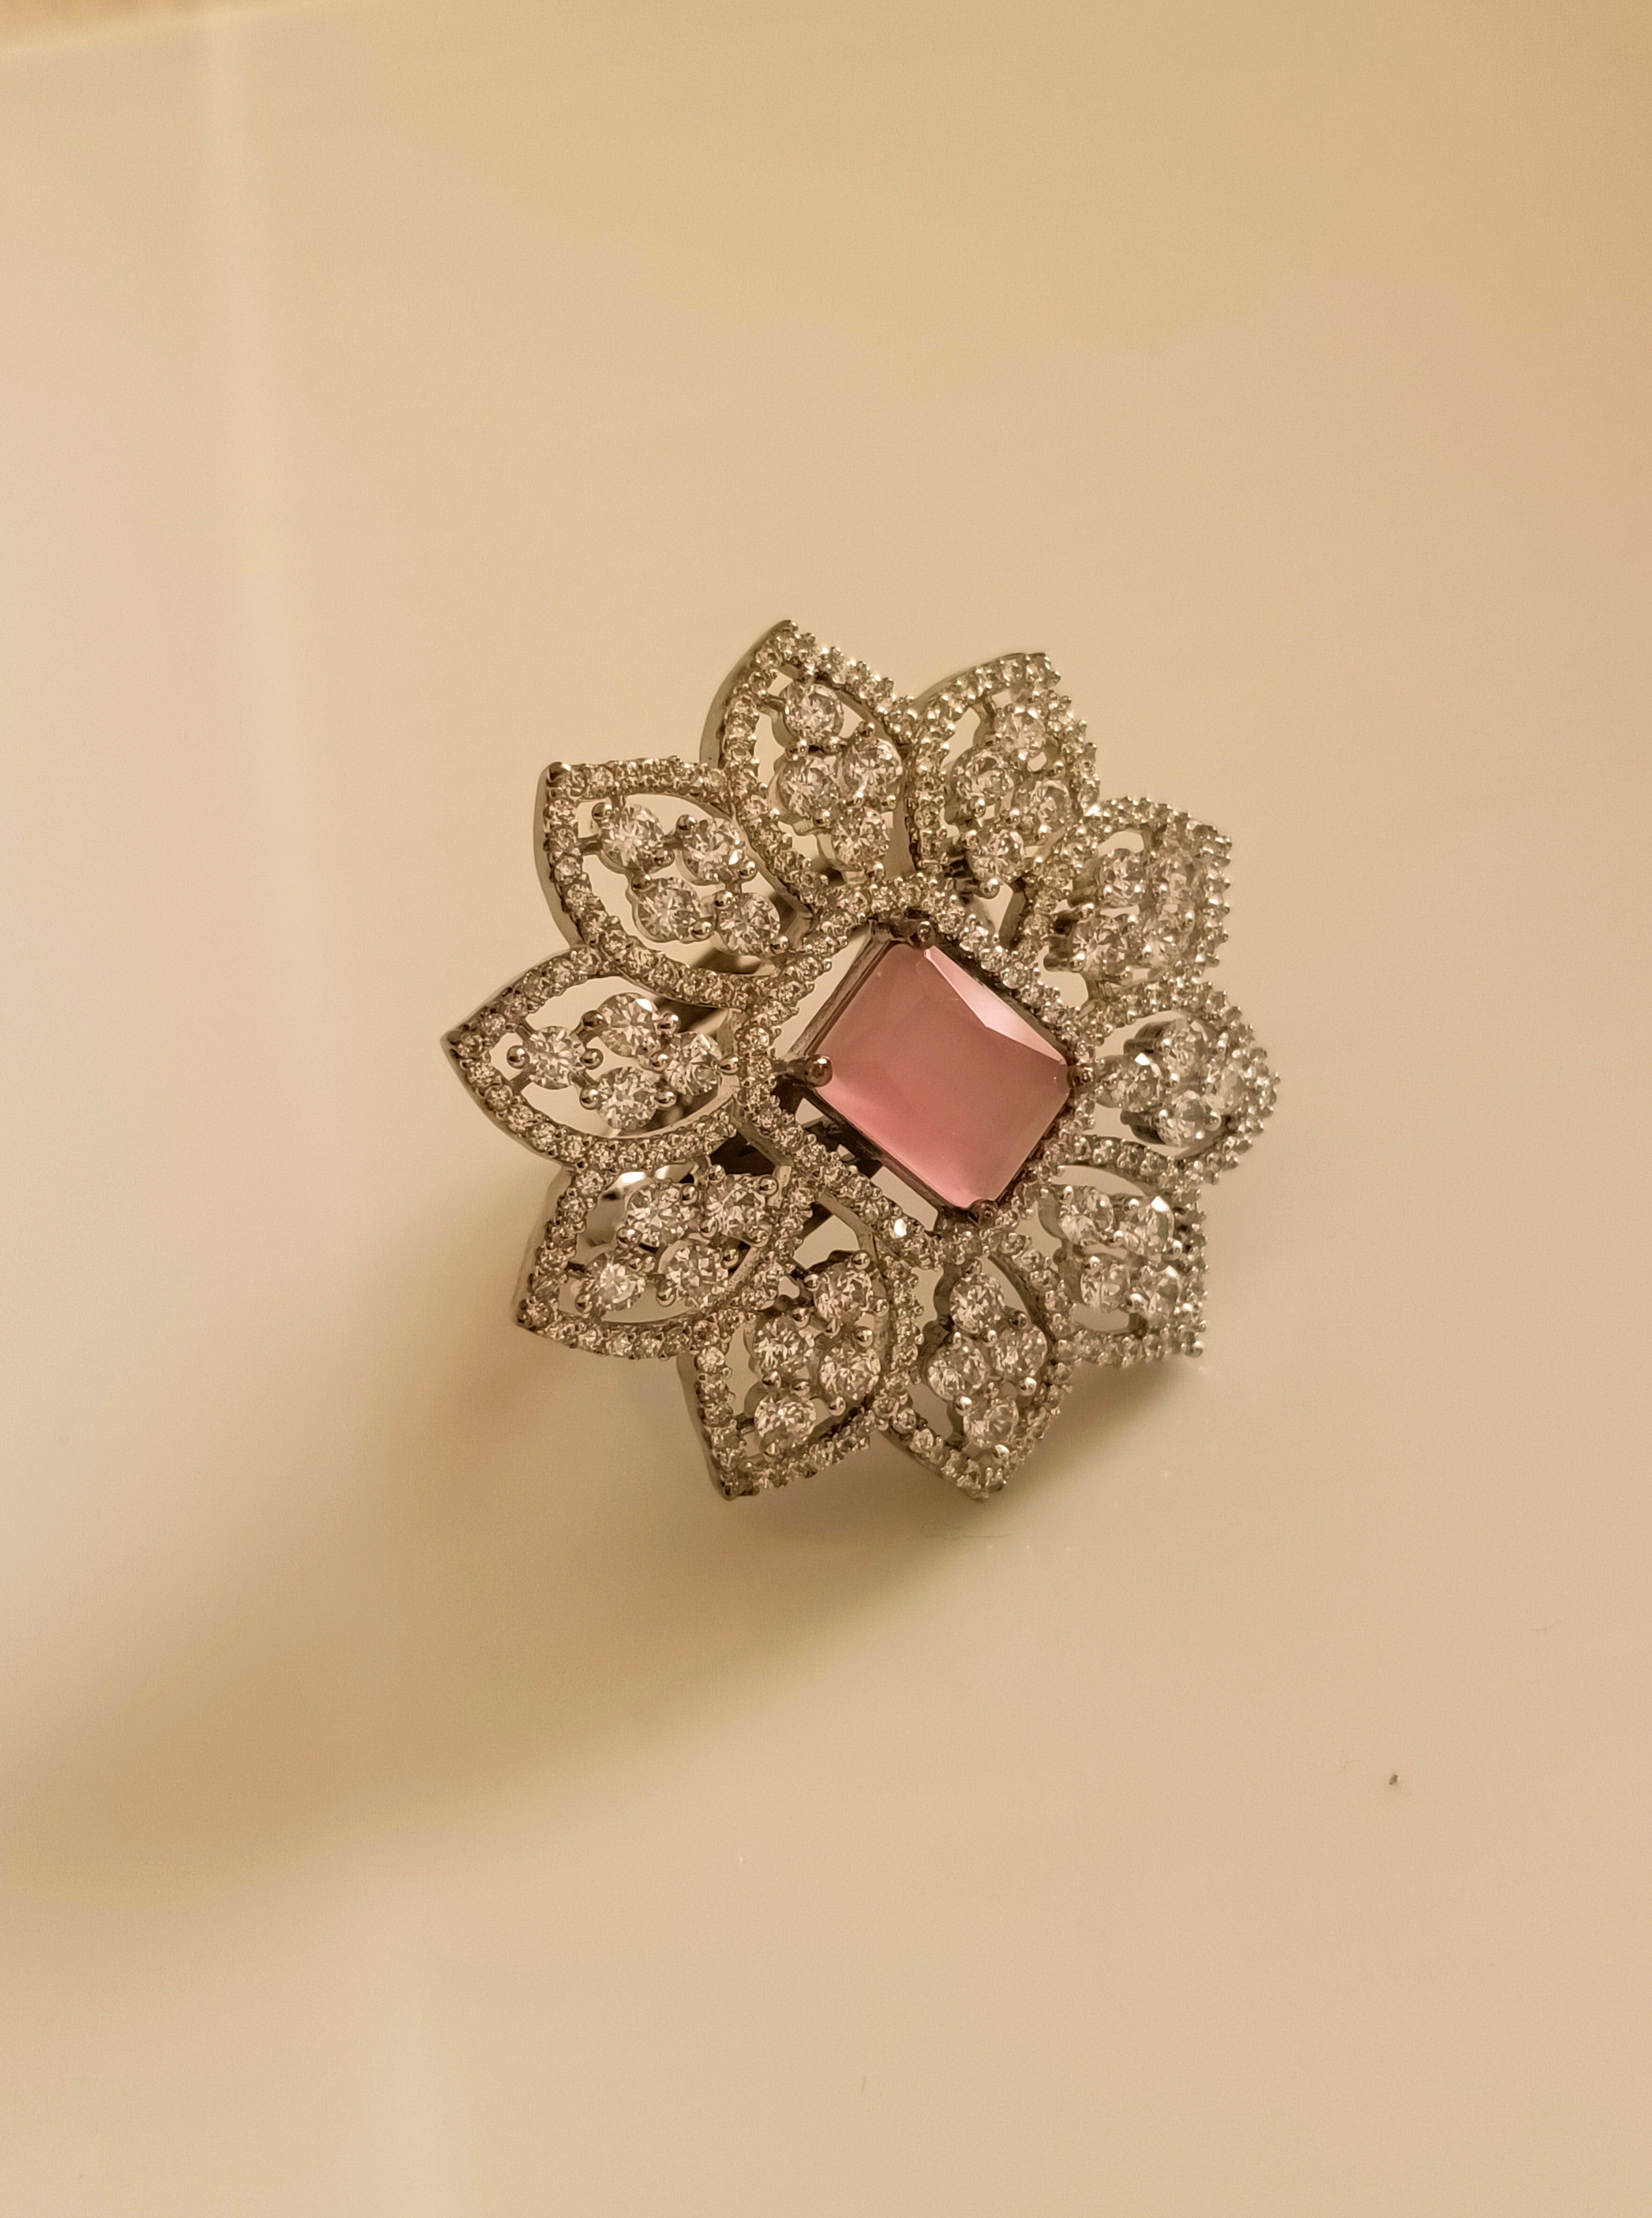 Blush Pink Hoshi She said yes- Jewelry by Pallavi 